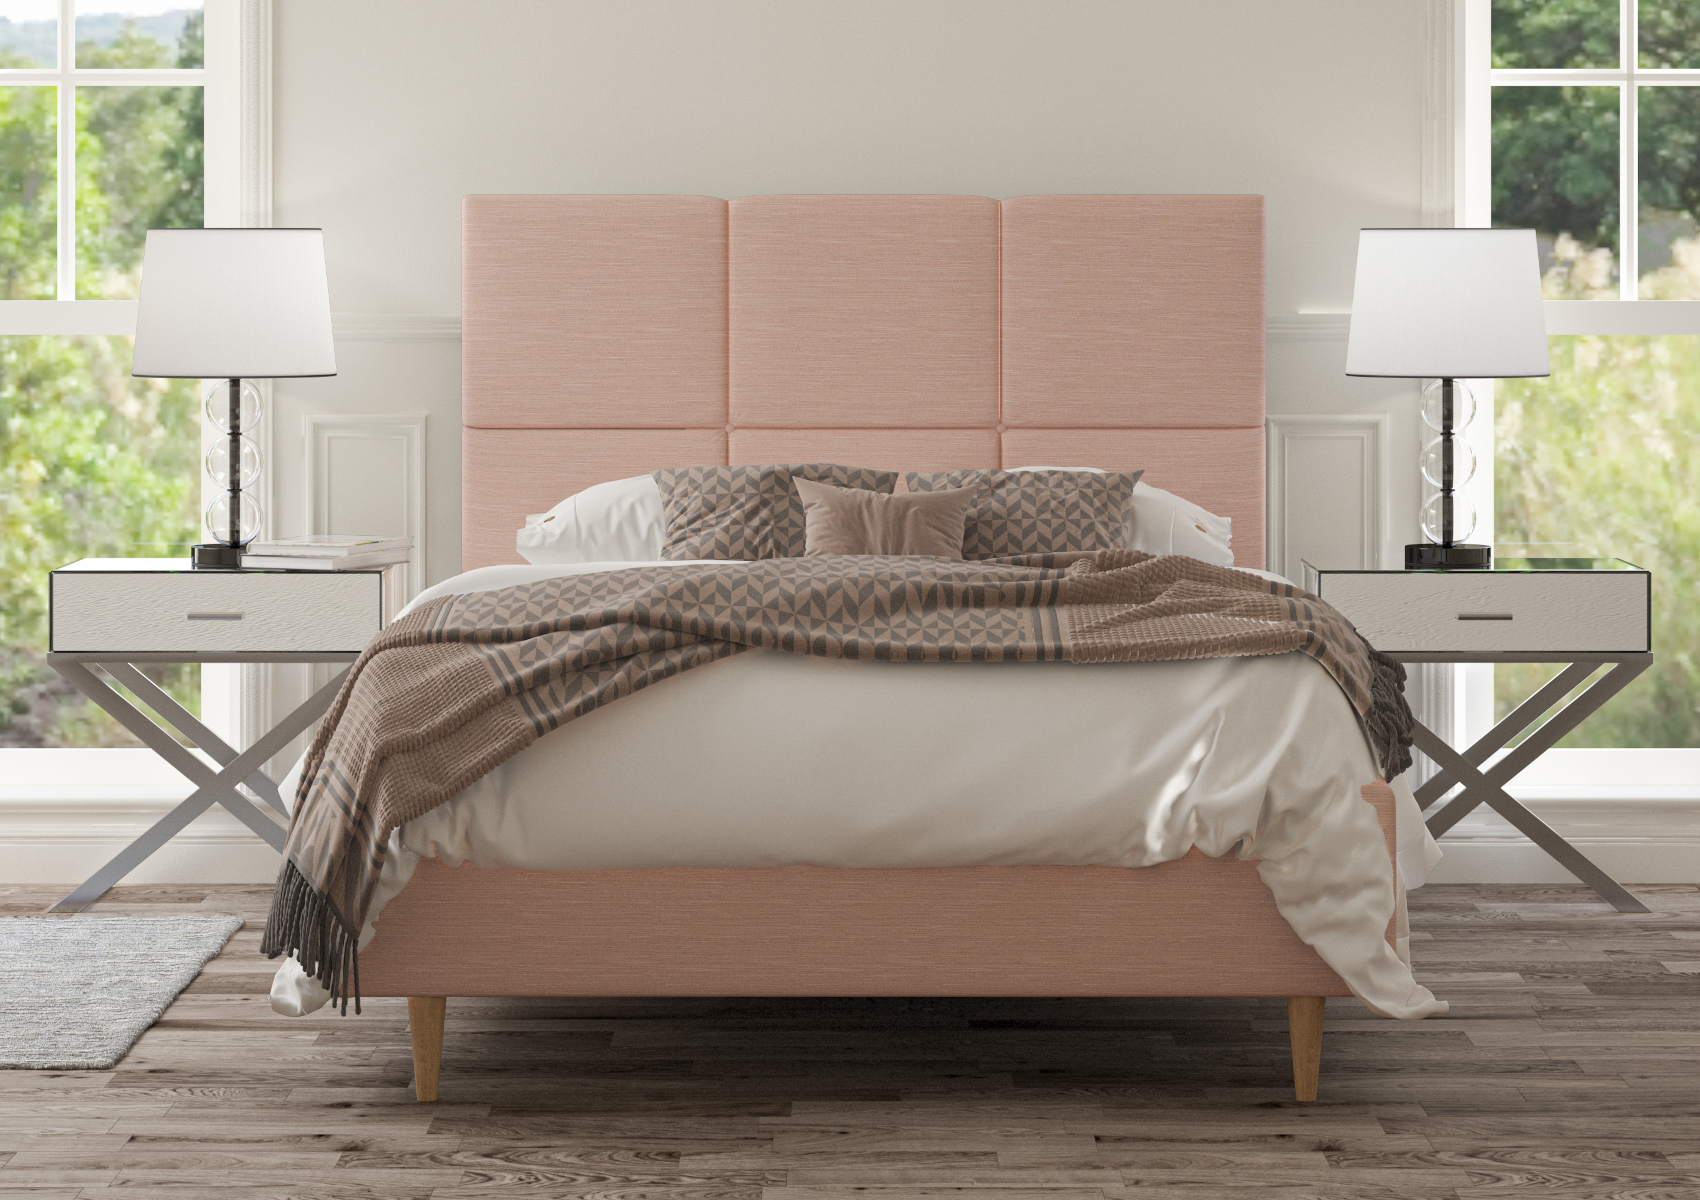 View Lauren Linea Powder Upholstered Super King Bed Time4Sleep information